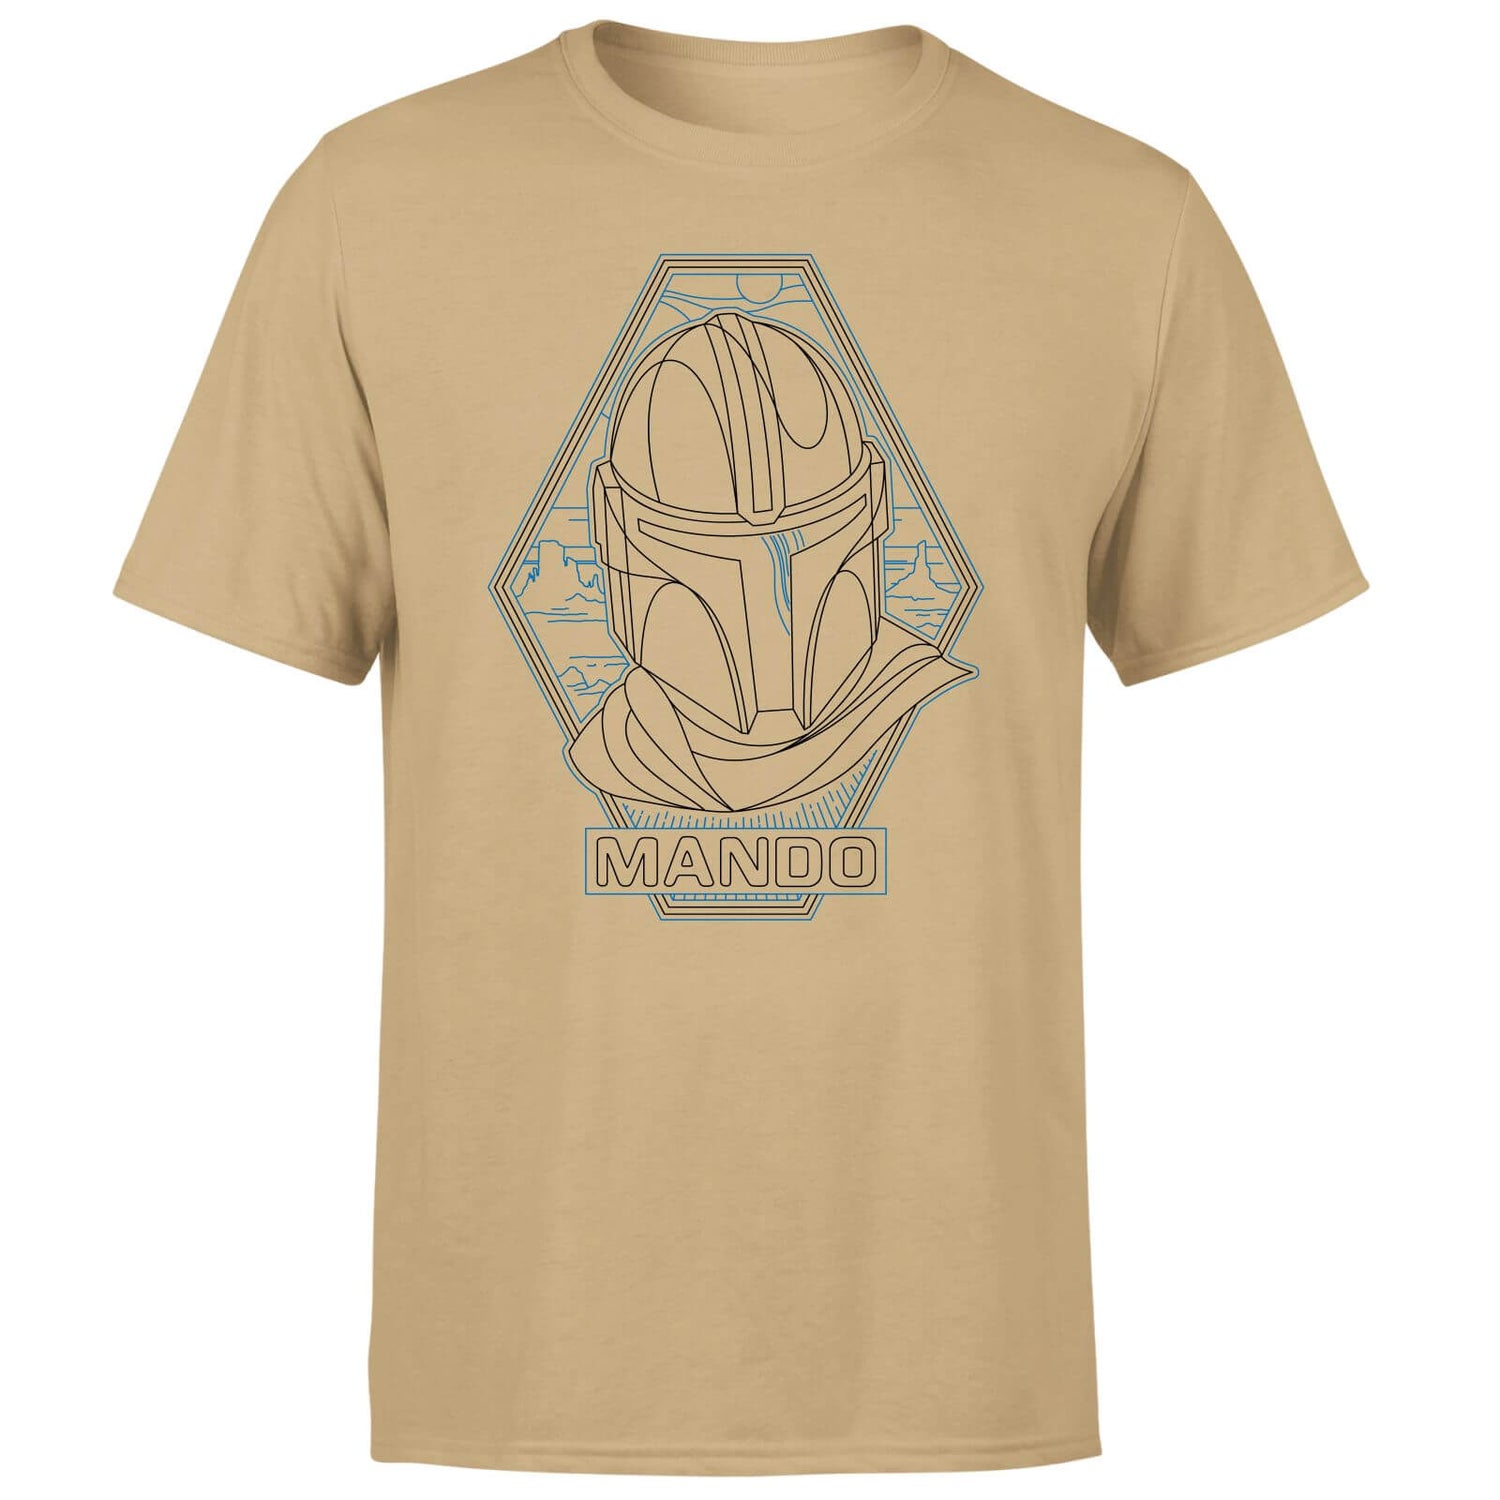 Star Wars The Mandalorian Mando Line Art Badge Men's T-Shirt - Tan